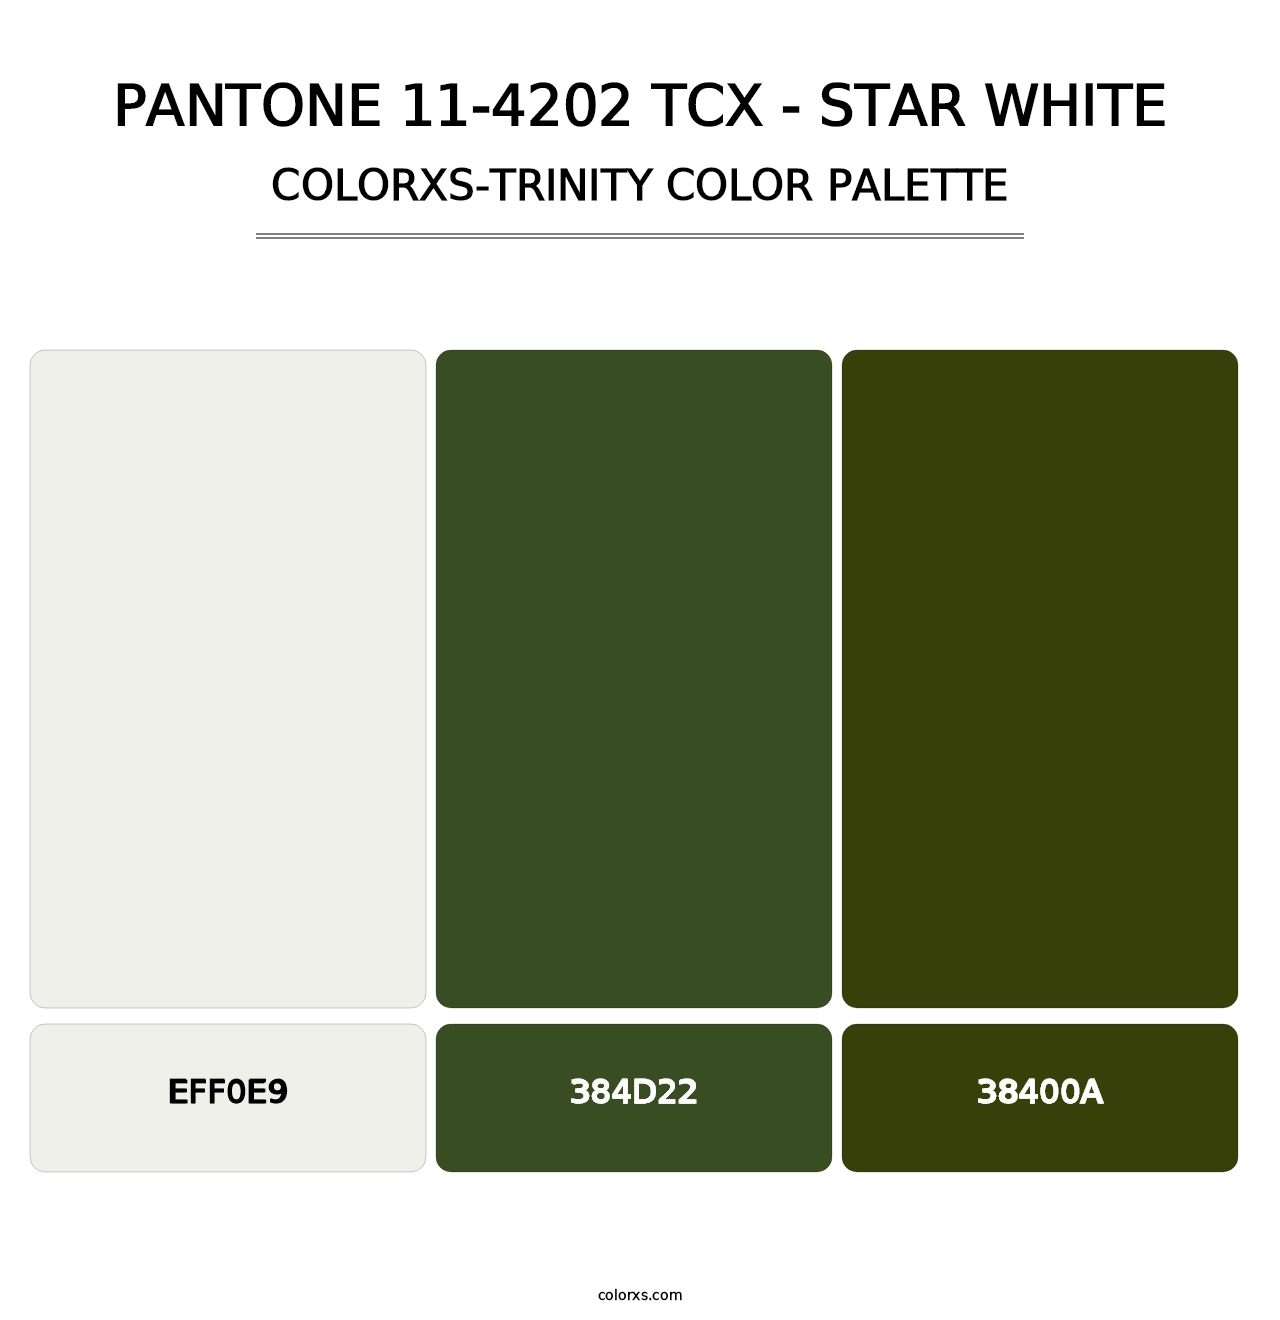 PANTONE 11-4202 TCX - Star White - Colorxs Trinity Palette